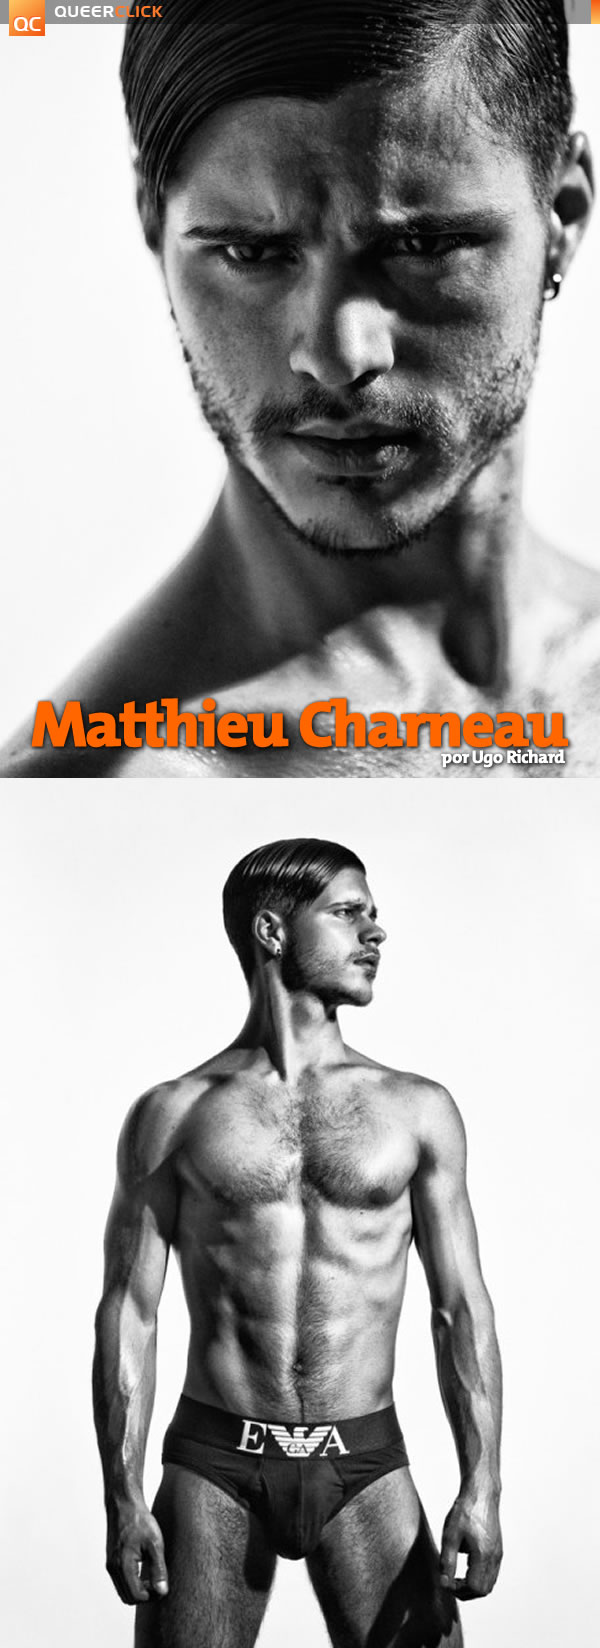 Ugo Richard: Matthieu Charneau